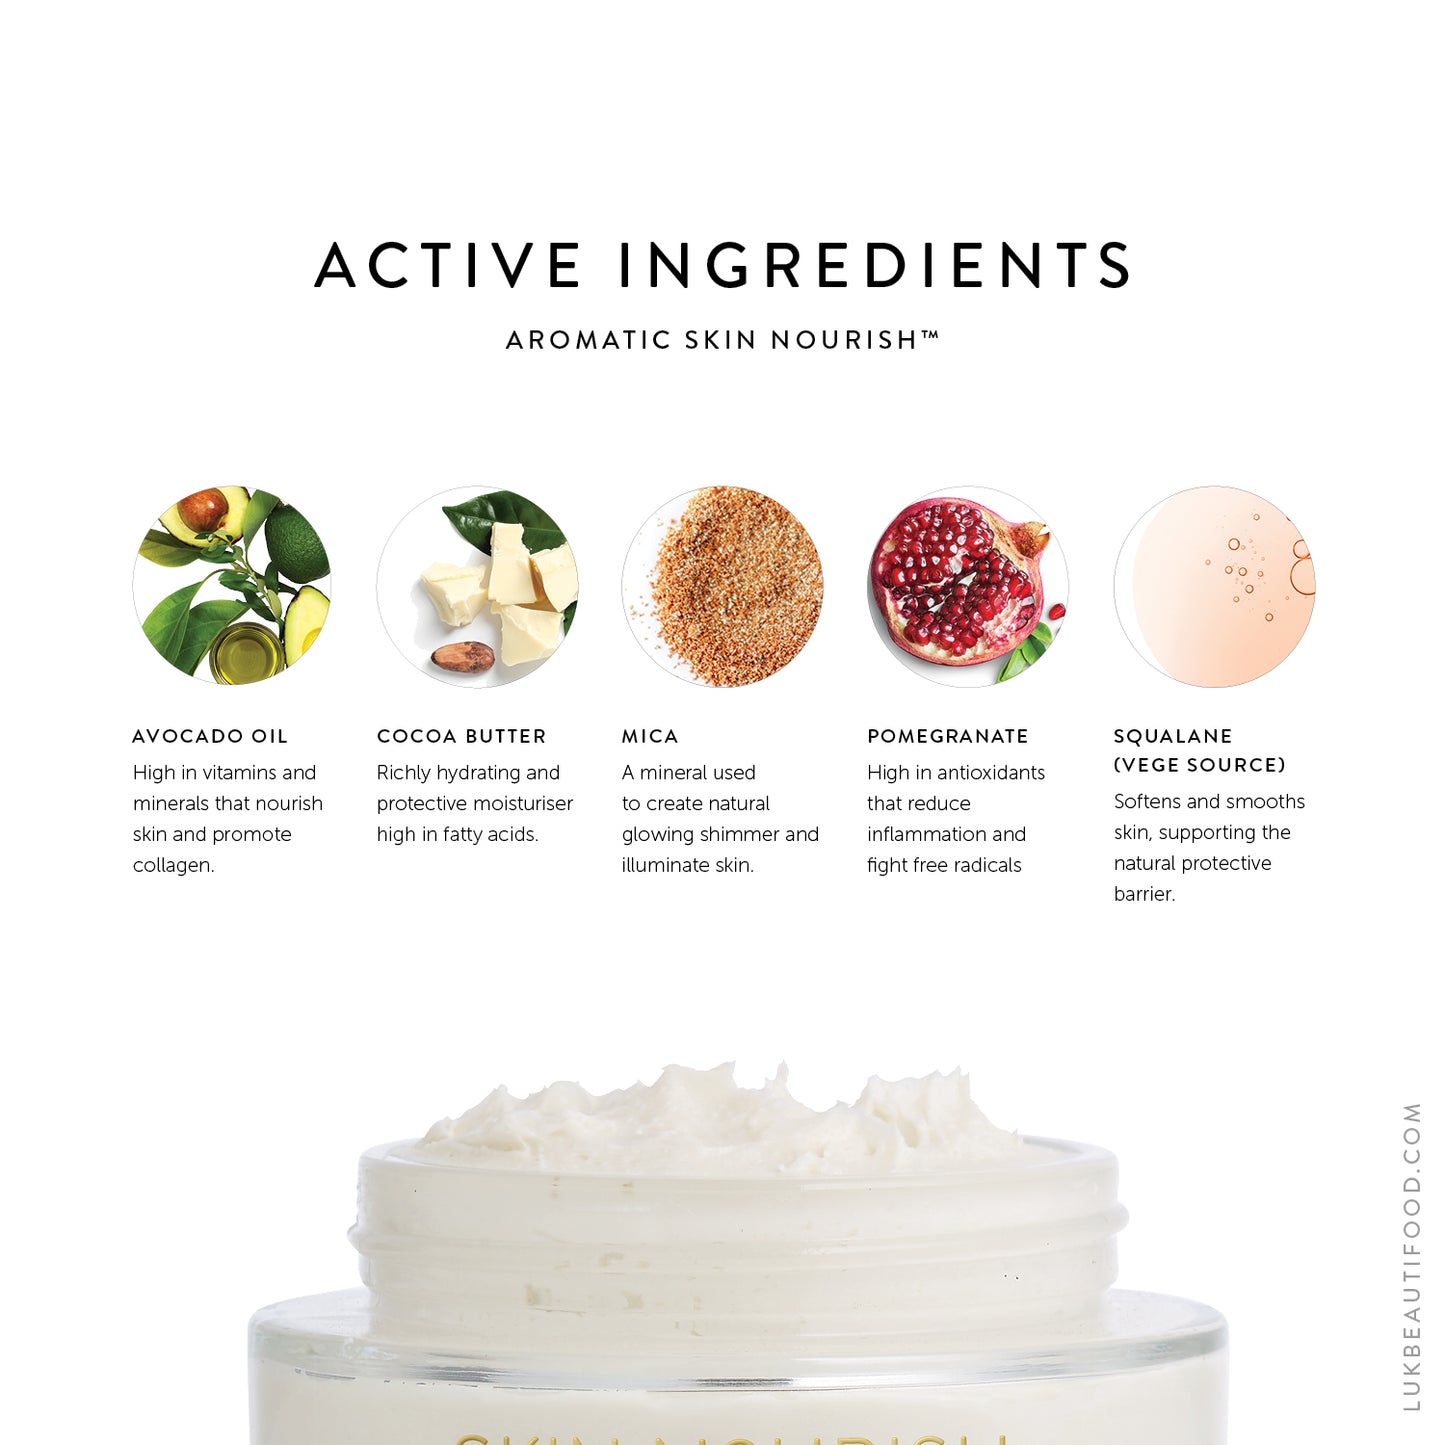 Lük Beautifood Aromatic Skin Nourish Ingredients